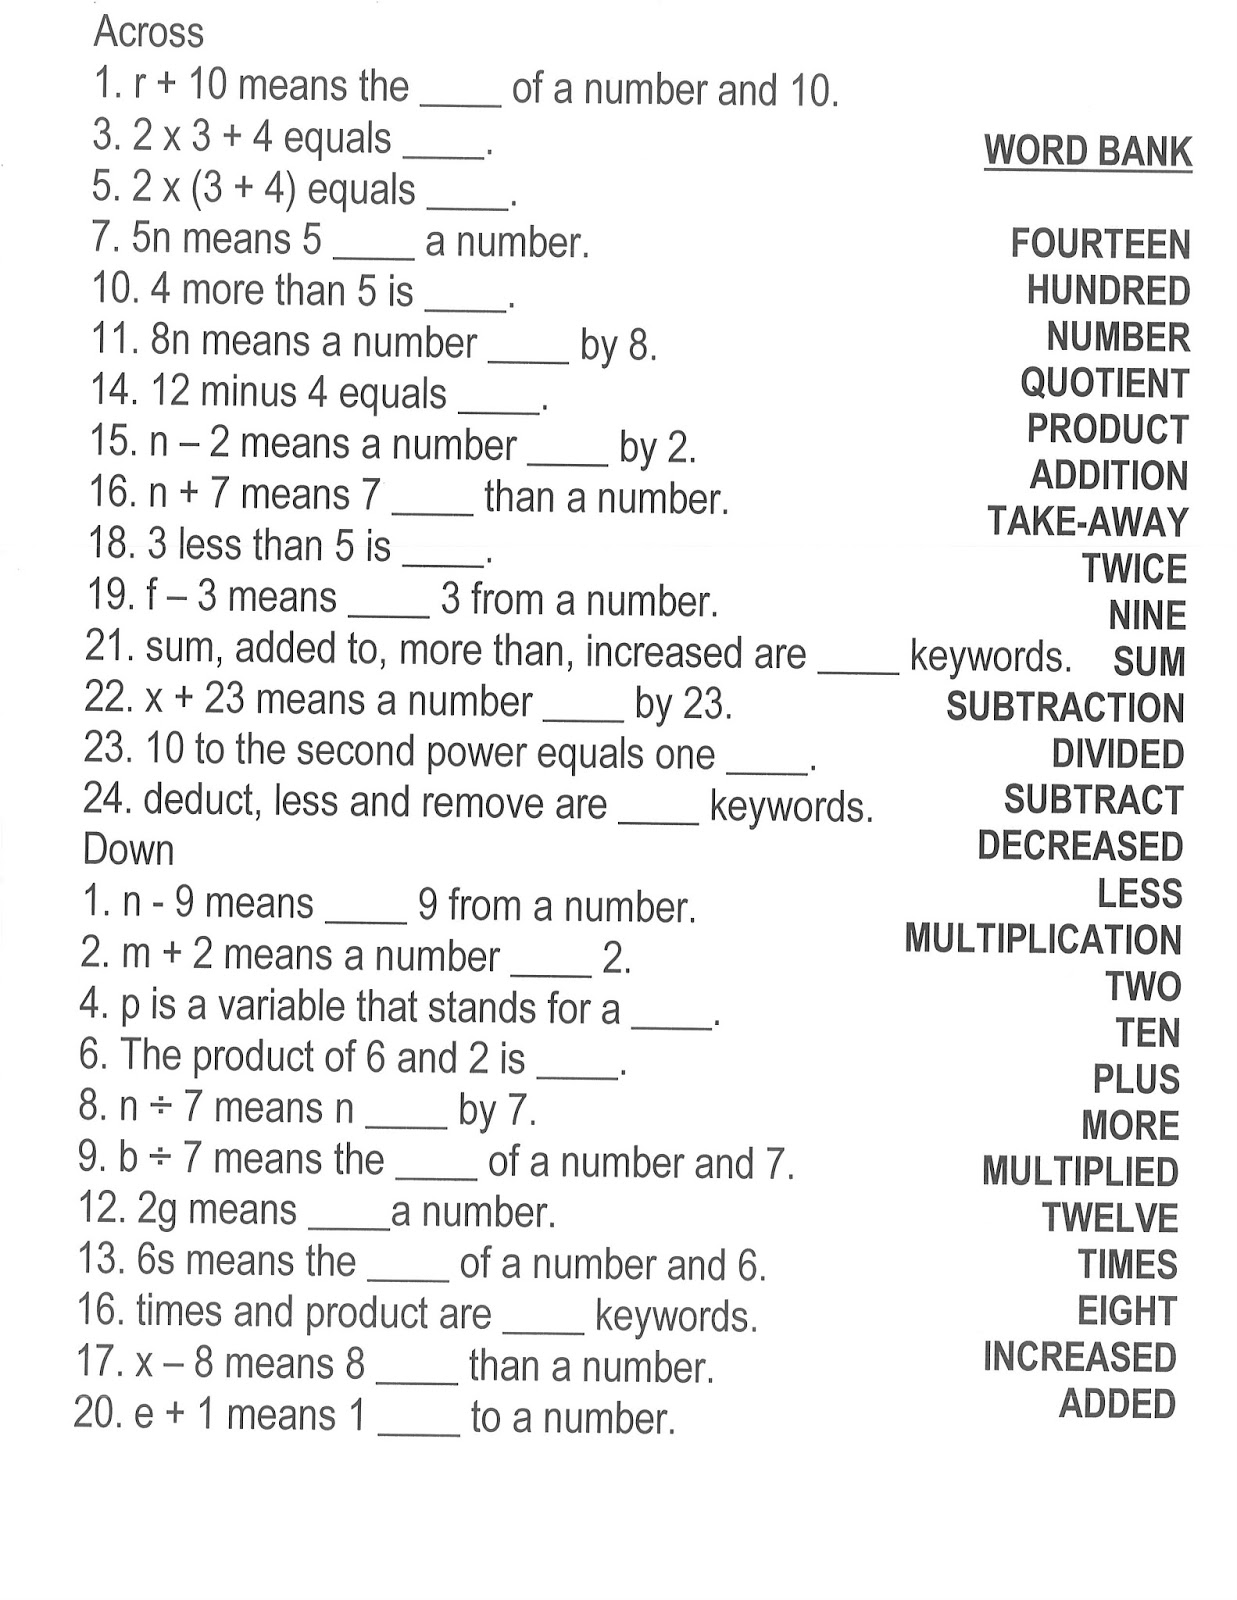 mrs-white-s-6th-grade-math-blog-translating-algebraic-expressions-crossword-puzzle